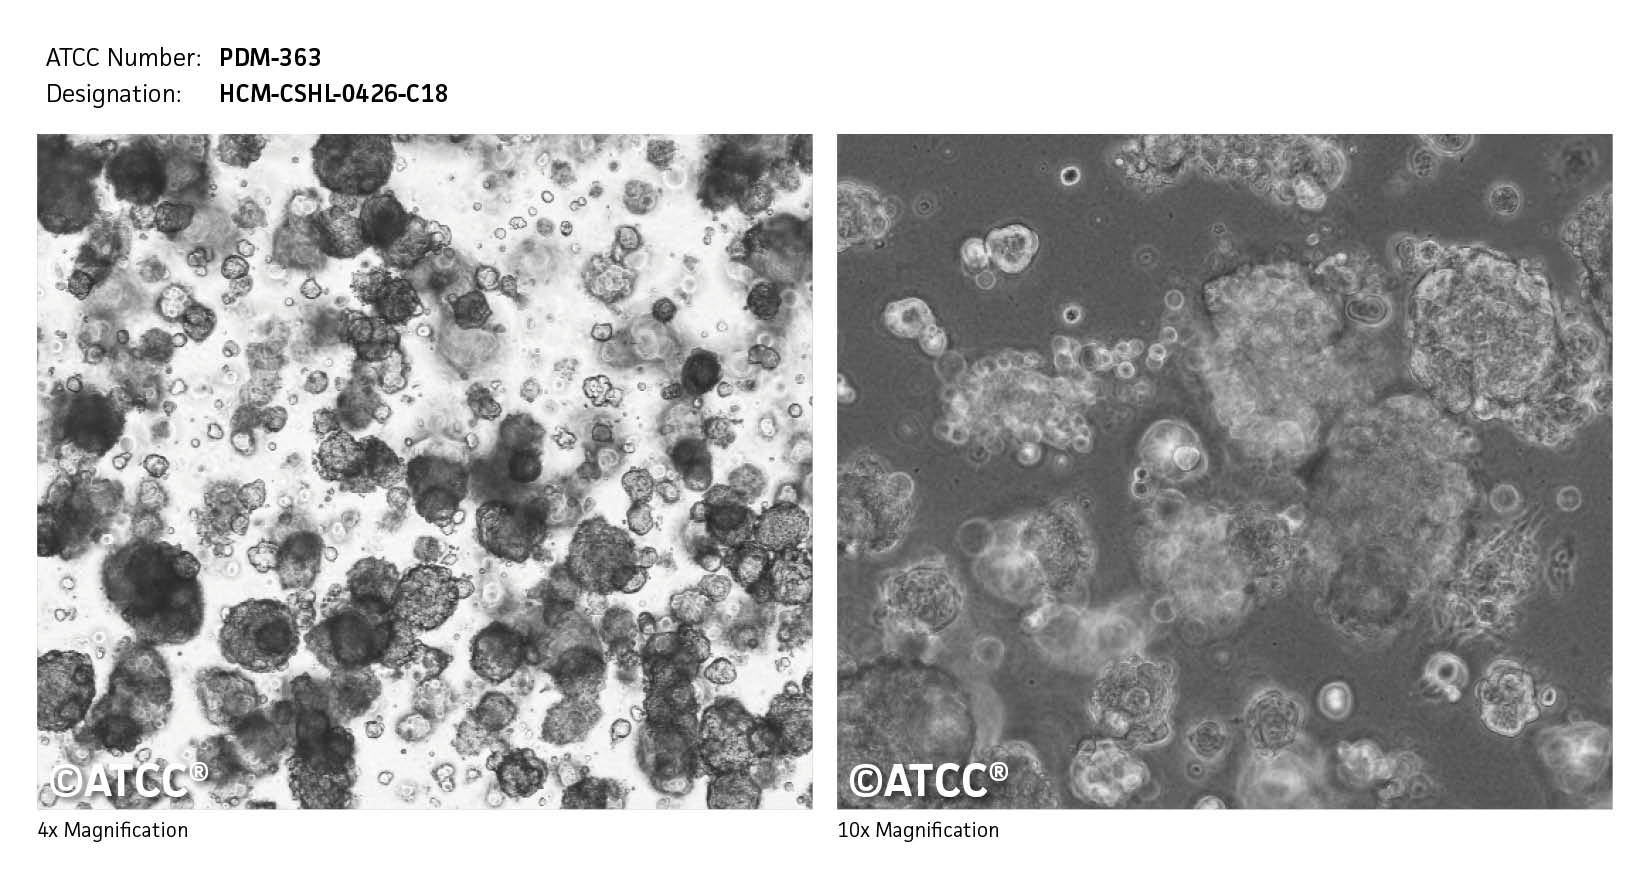 ATCC PDM-363 Cell Micrograph